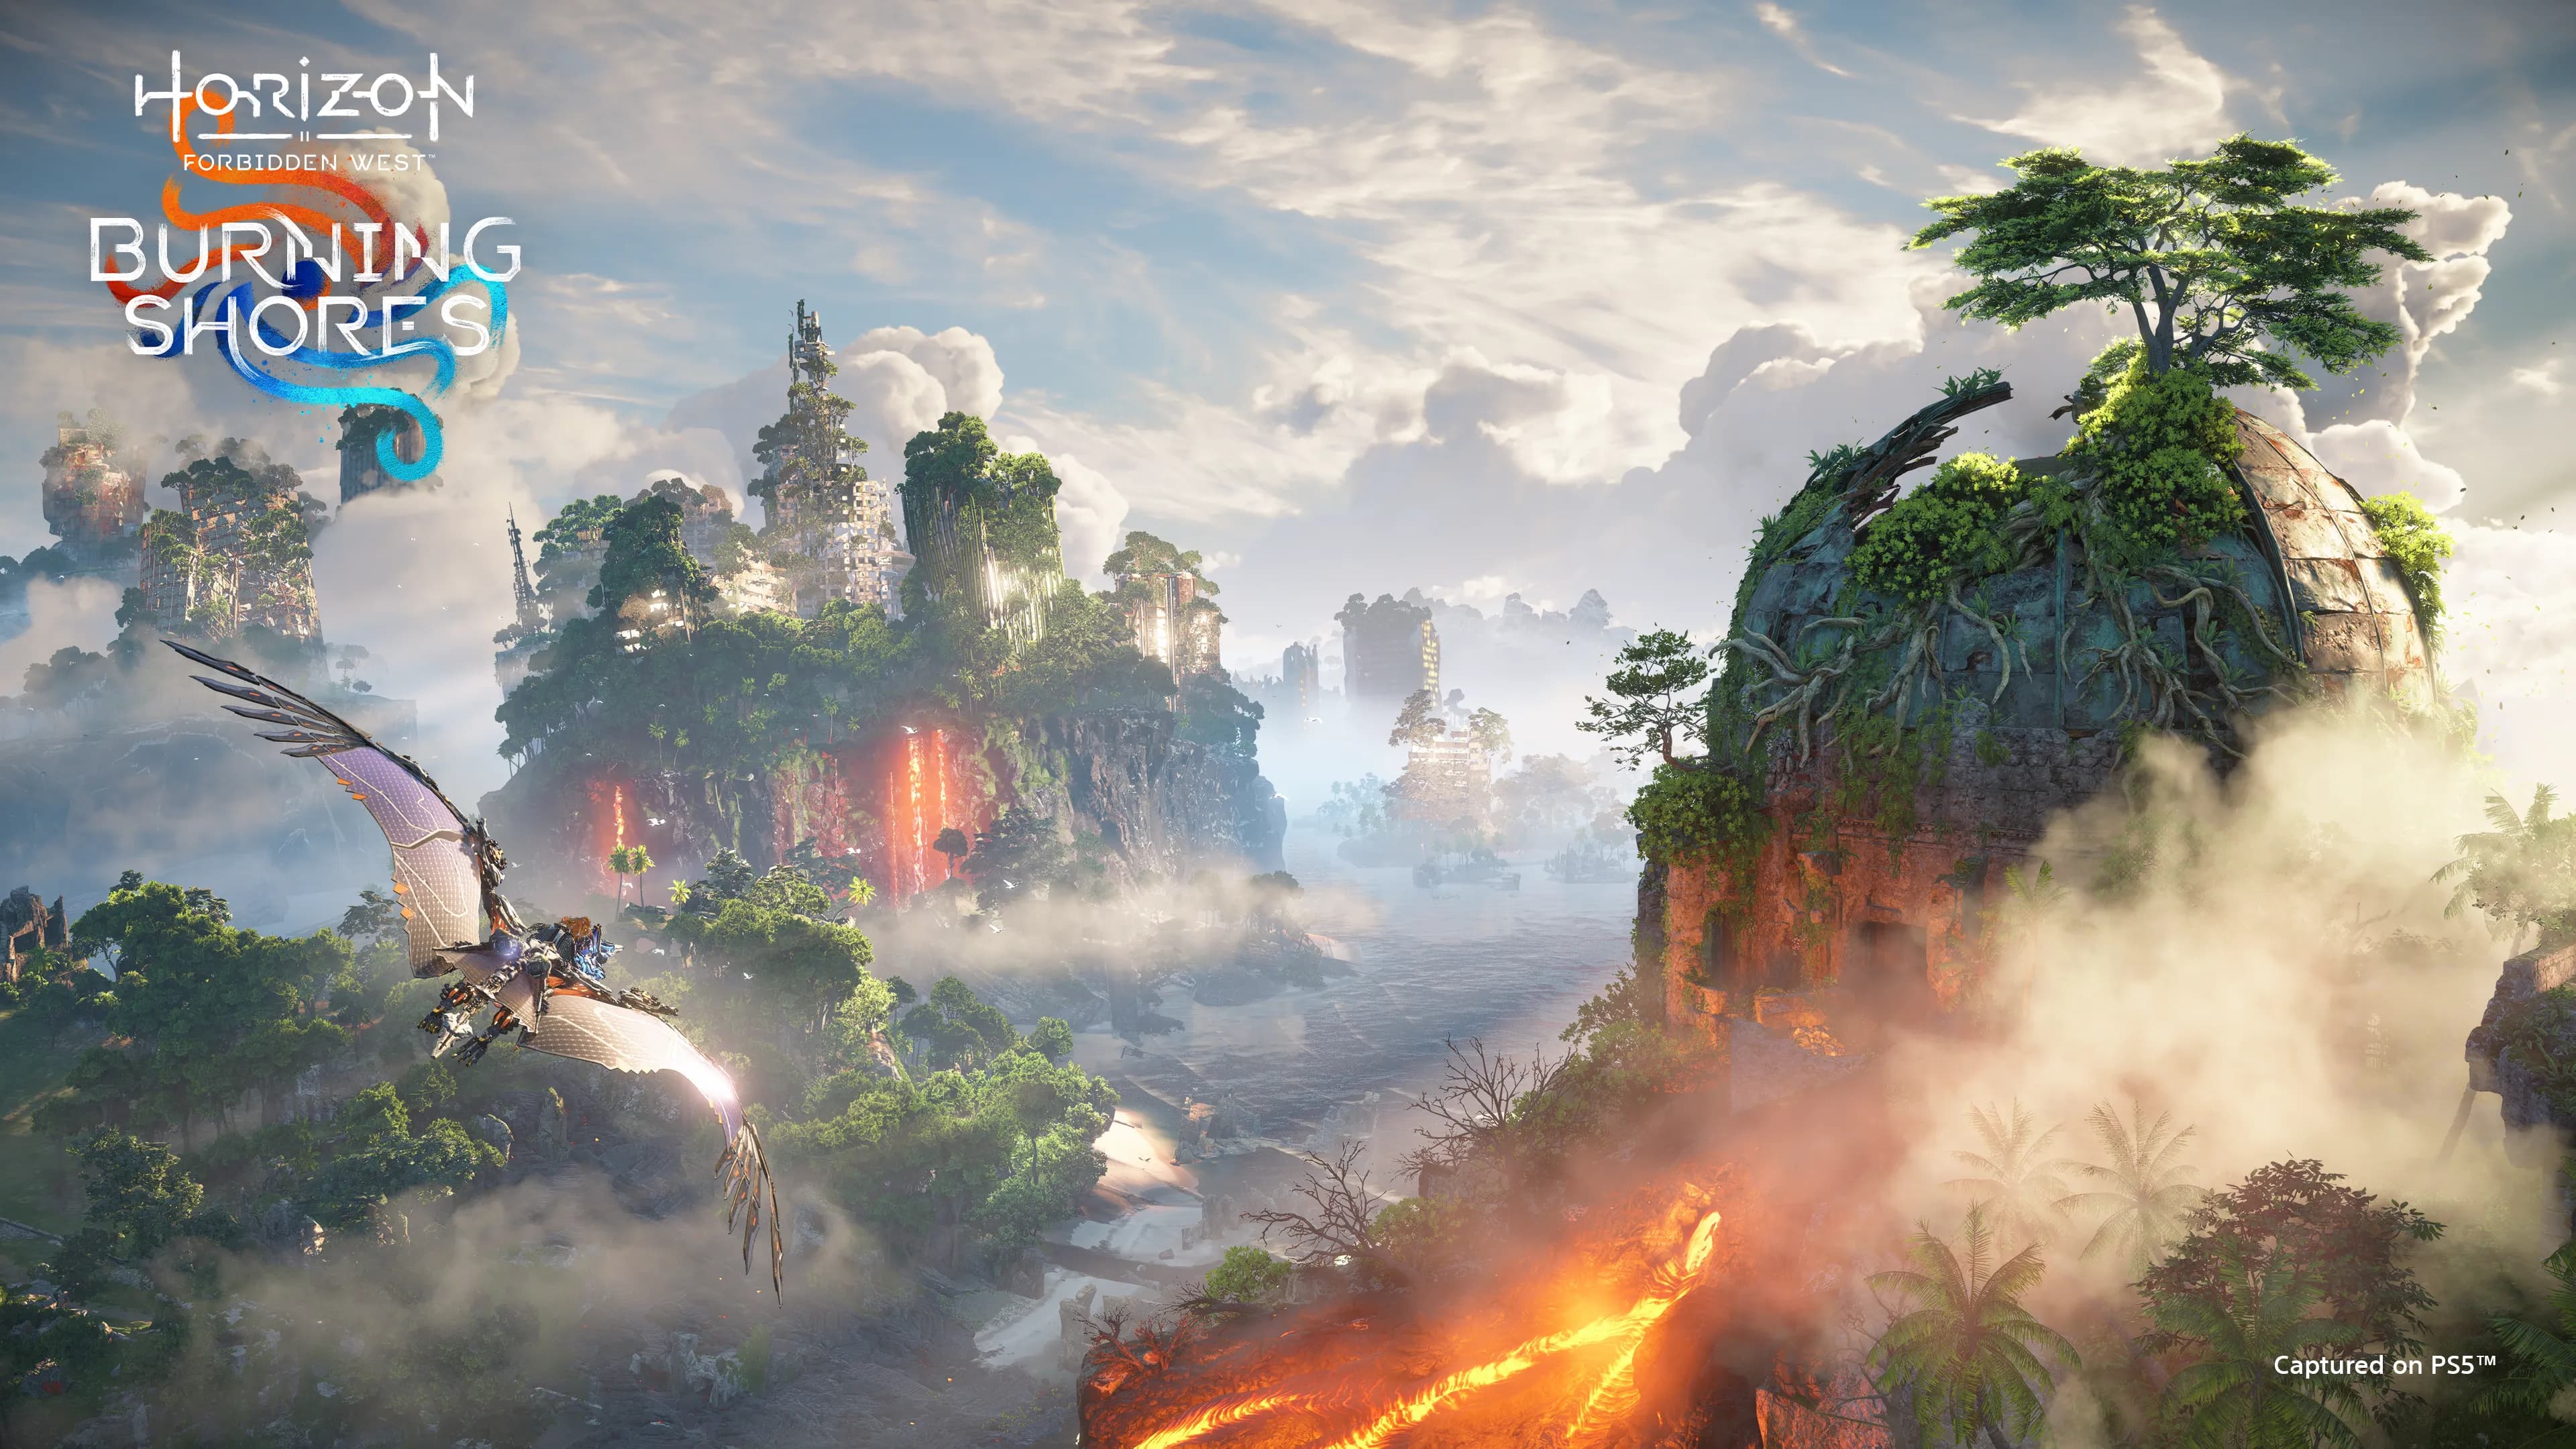 Horizon Forbidden West: Burning Shores being bombed on Metacritic